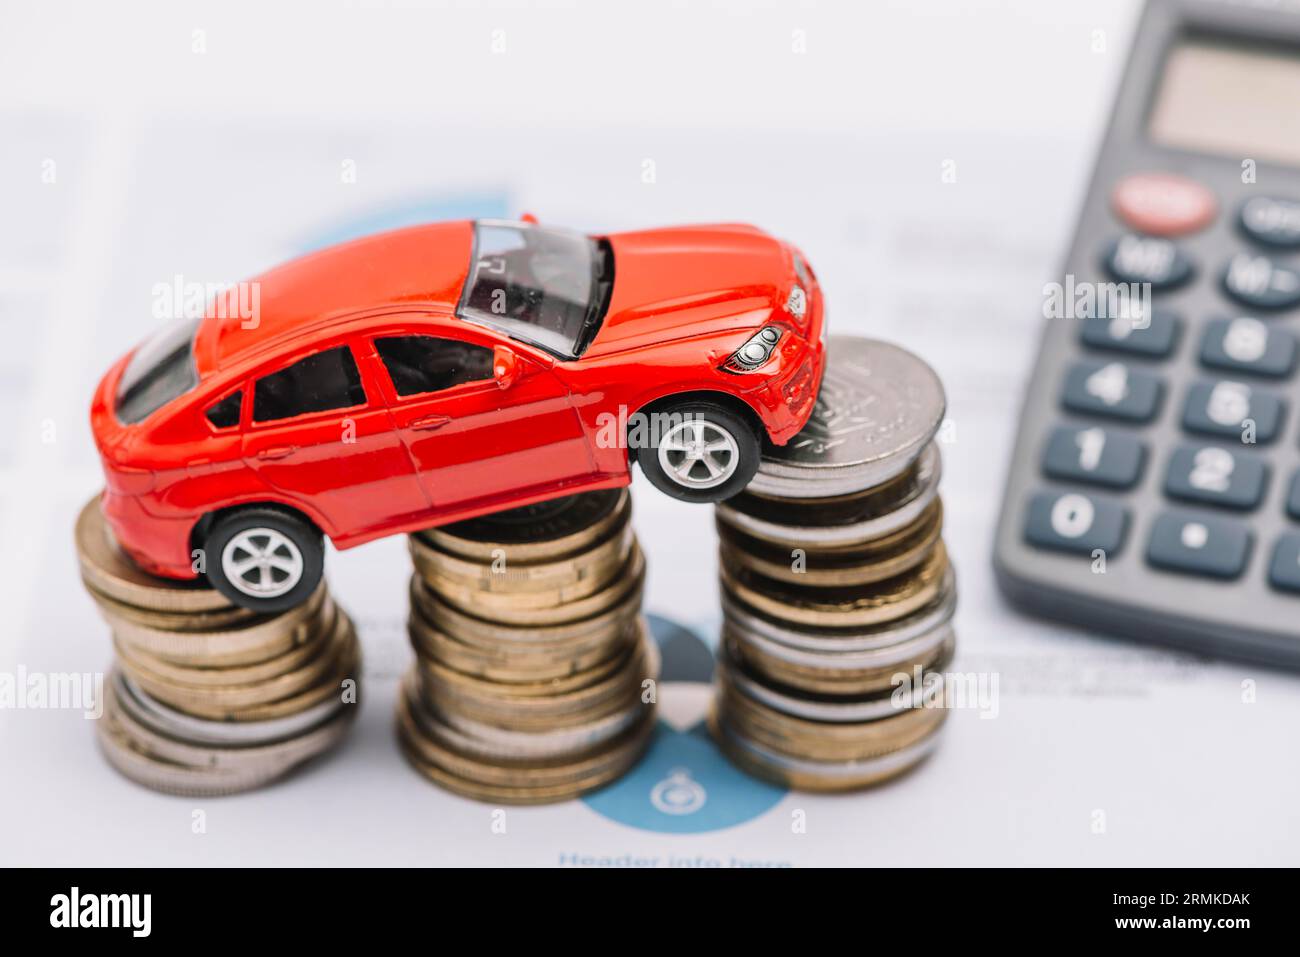 Toy car balancing increasing coin stack Stock Photo